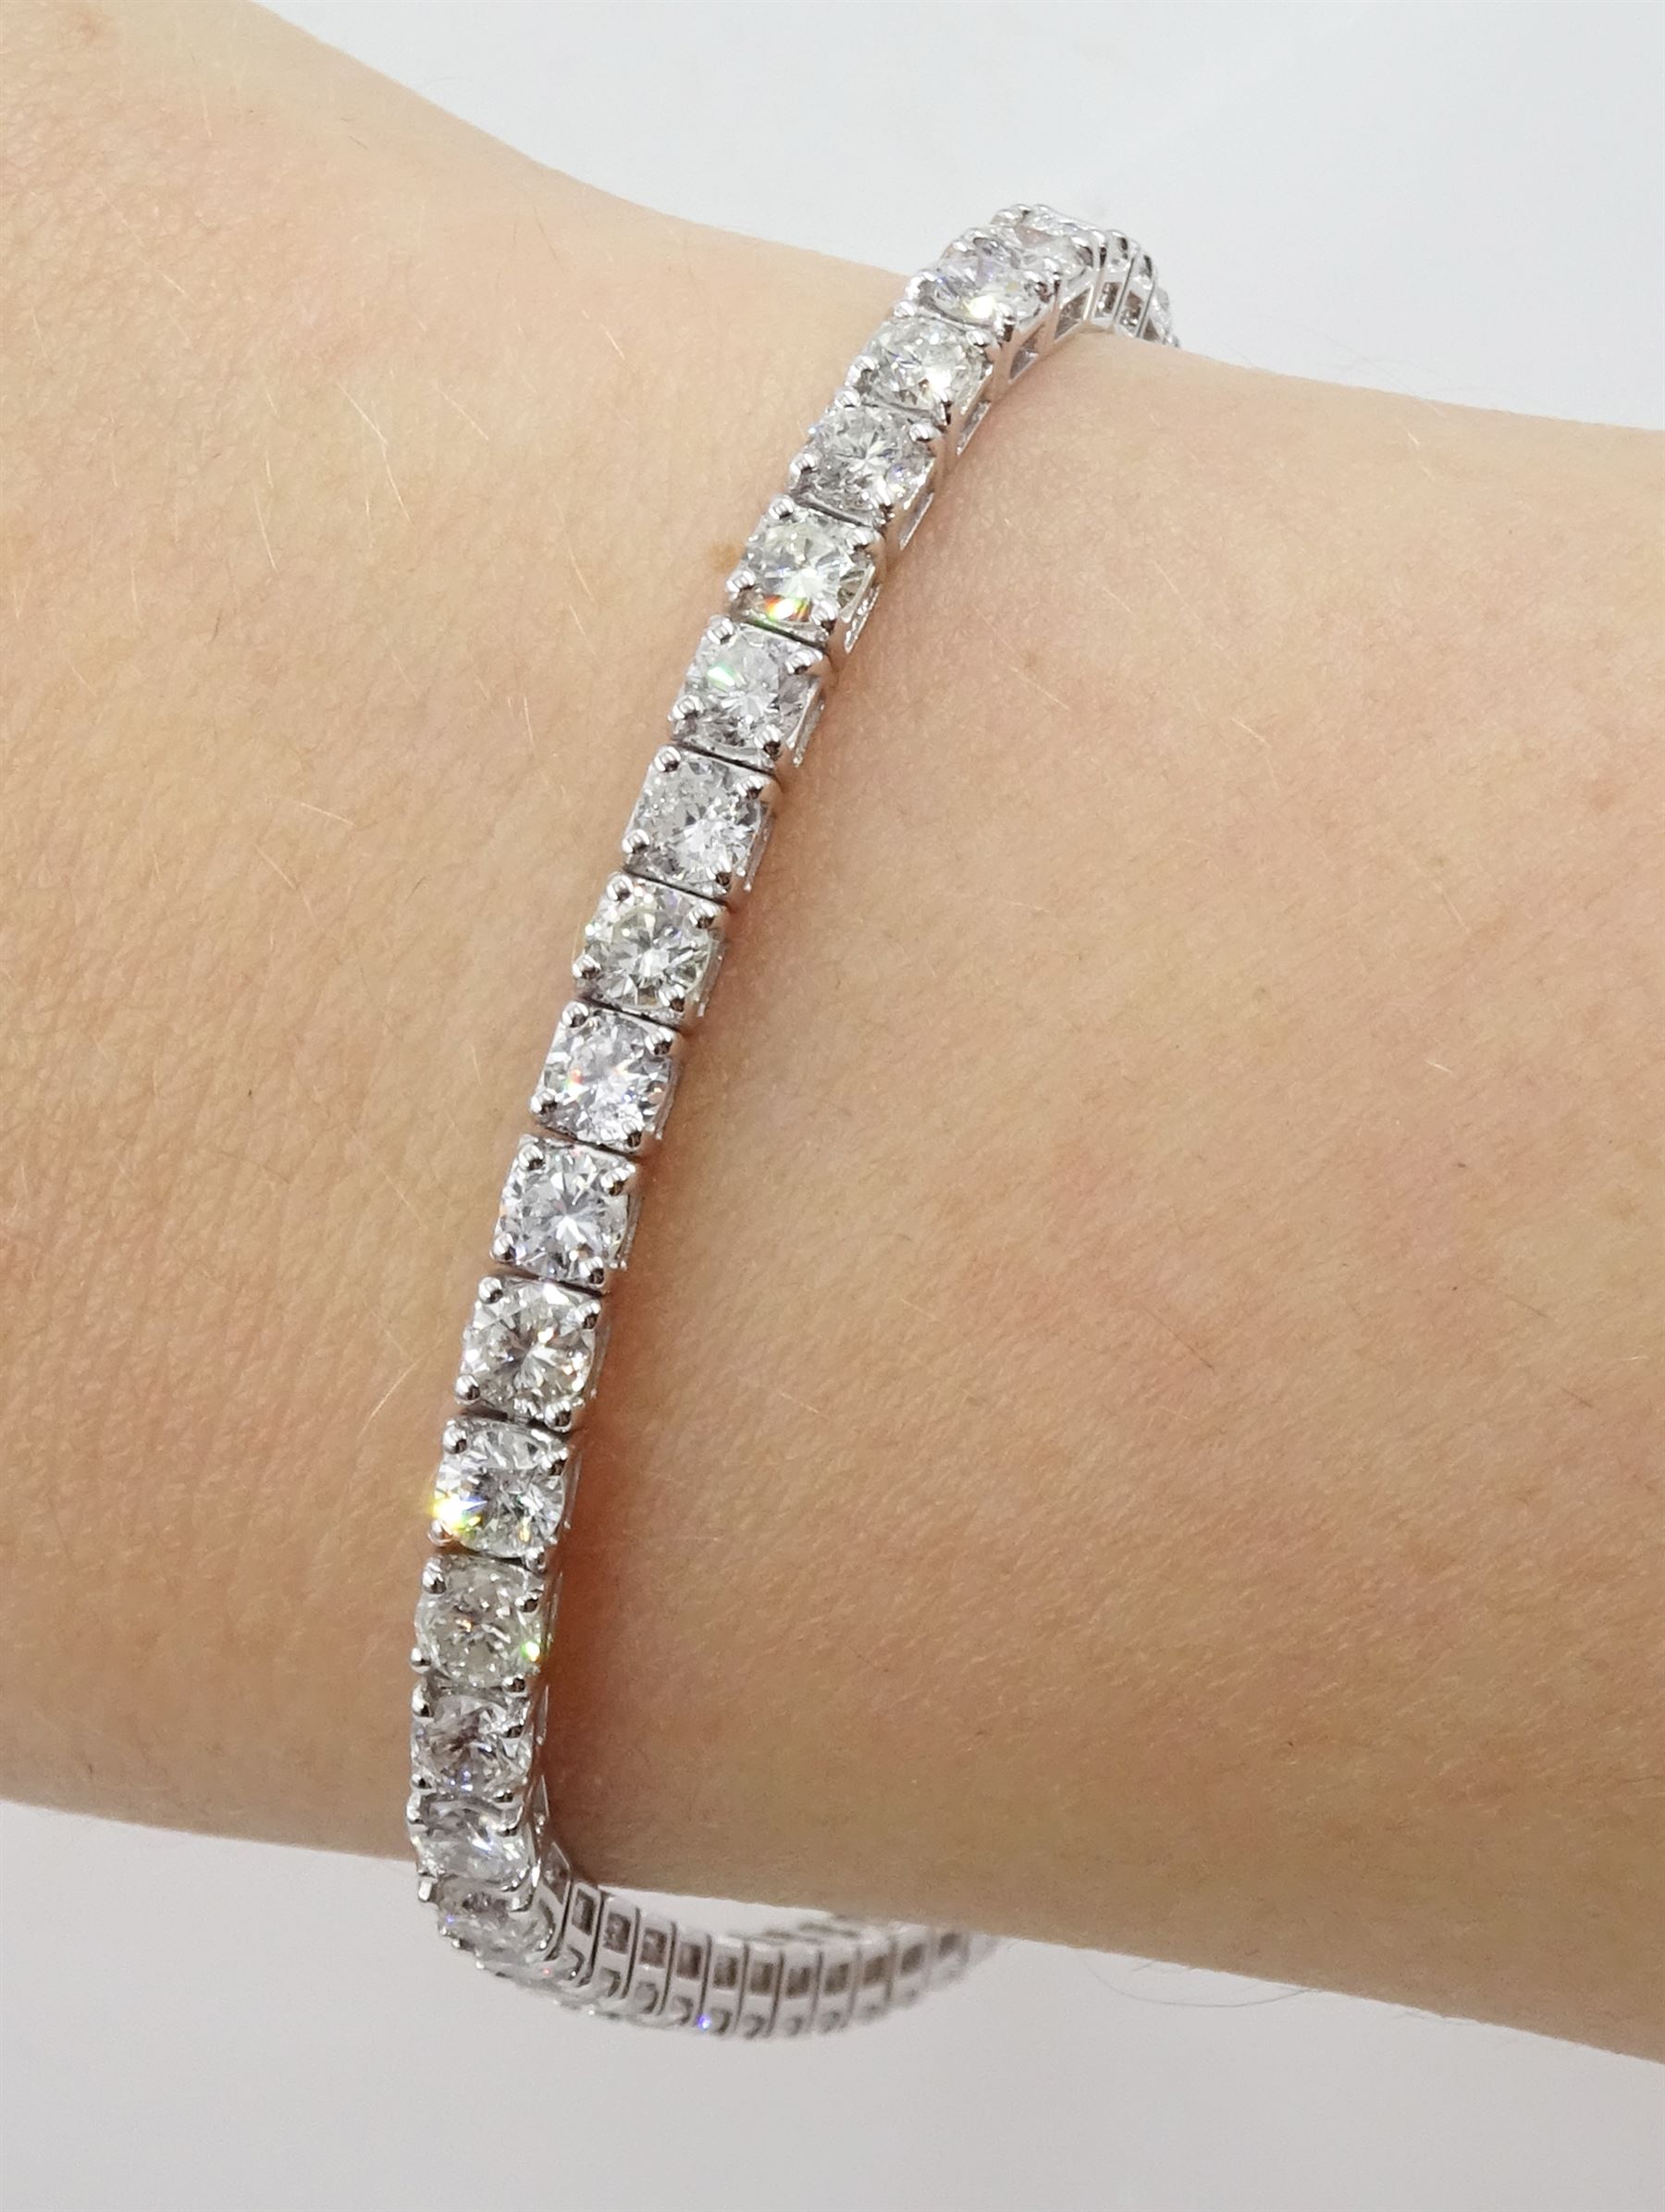 18ct white gold round brilliant cut diamond line bracelet - Image 2 of 4